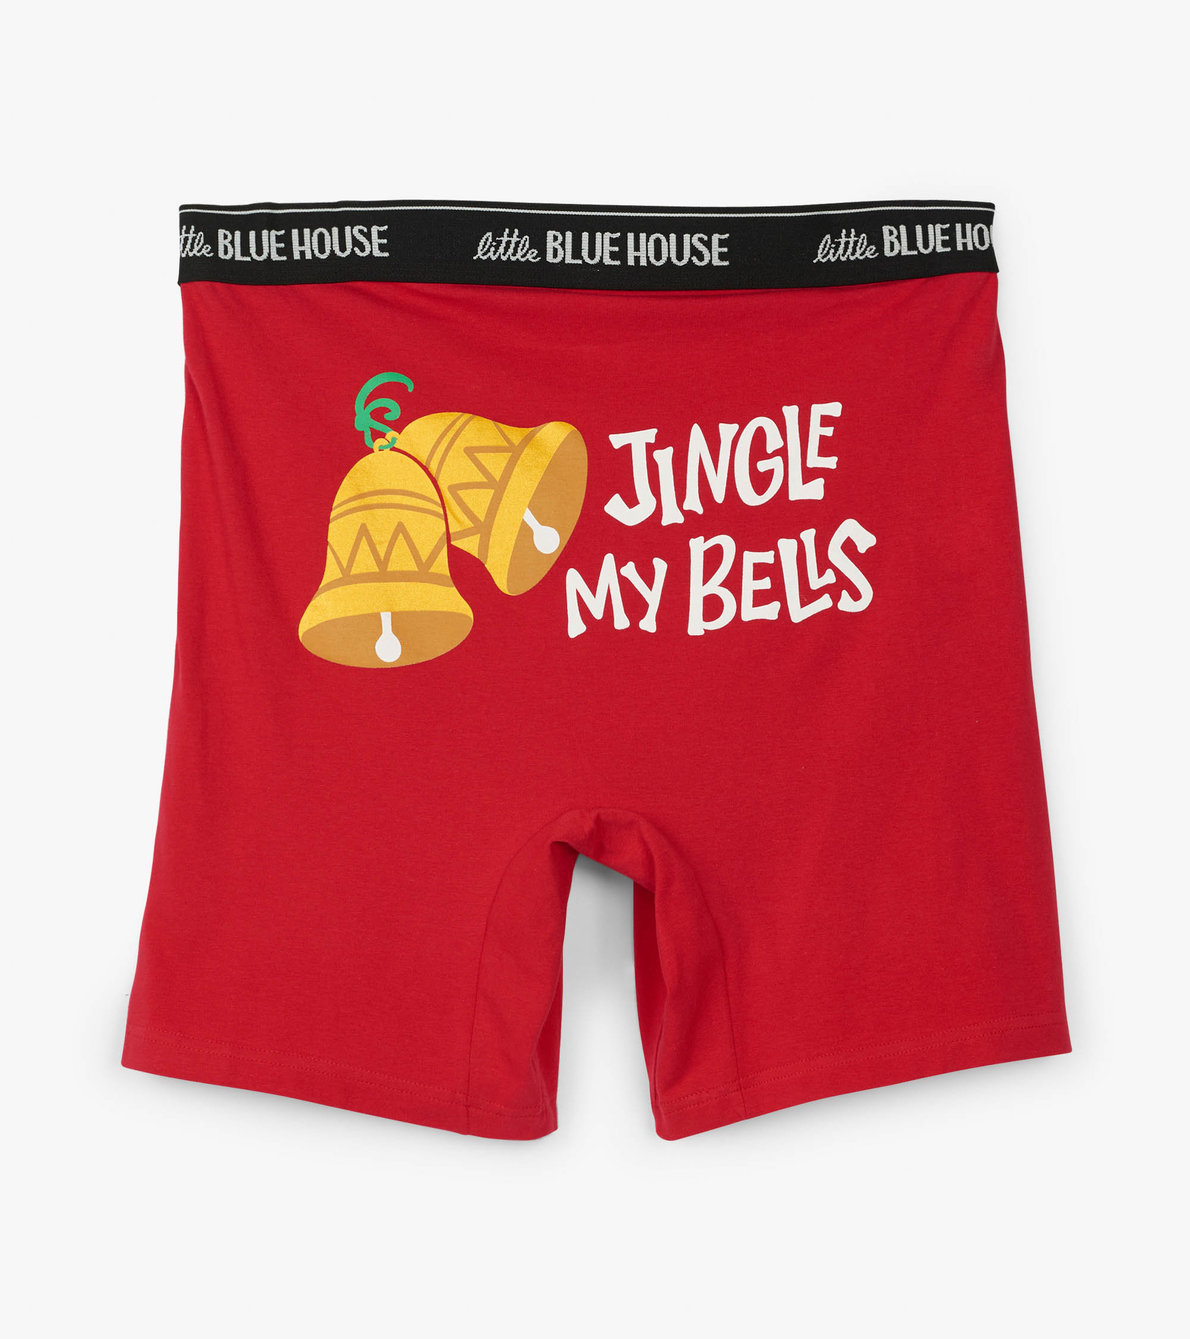 View larger image of Jingle My Bells Men's Boxer Briefs